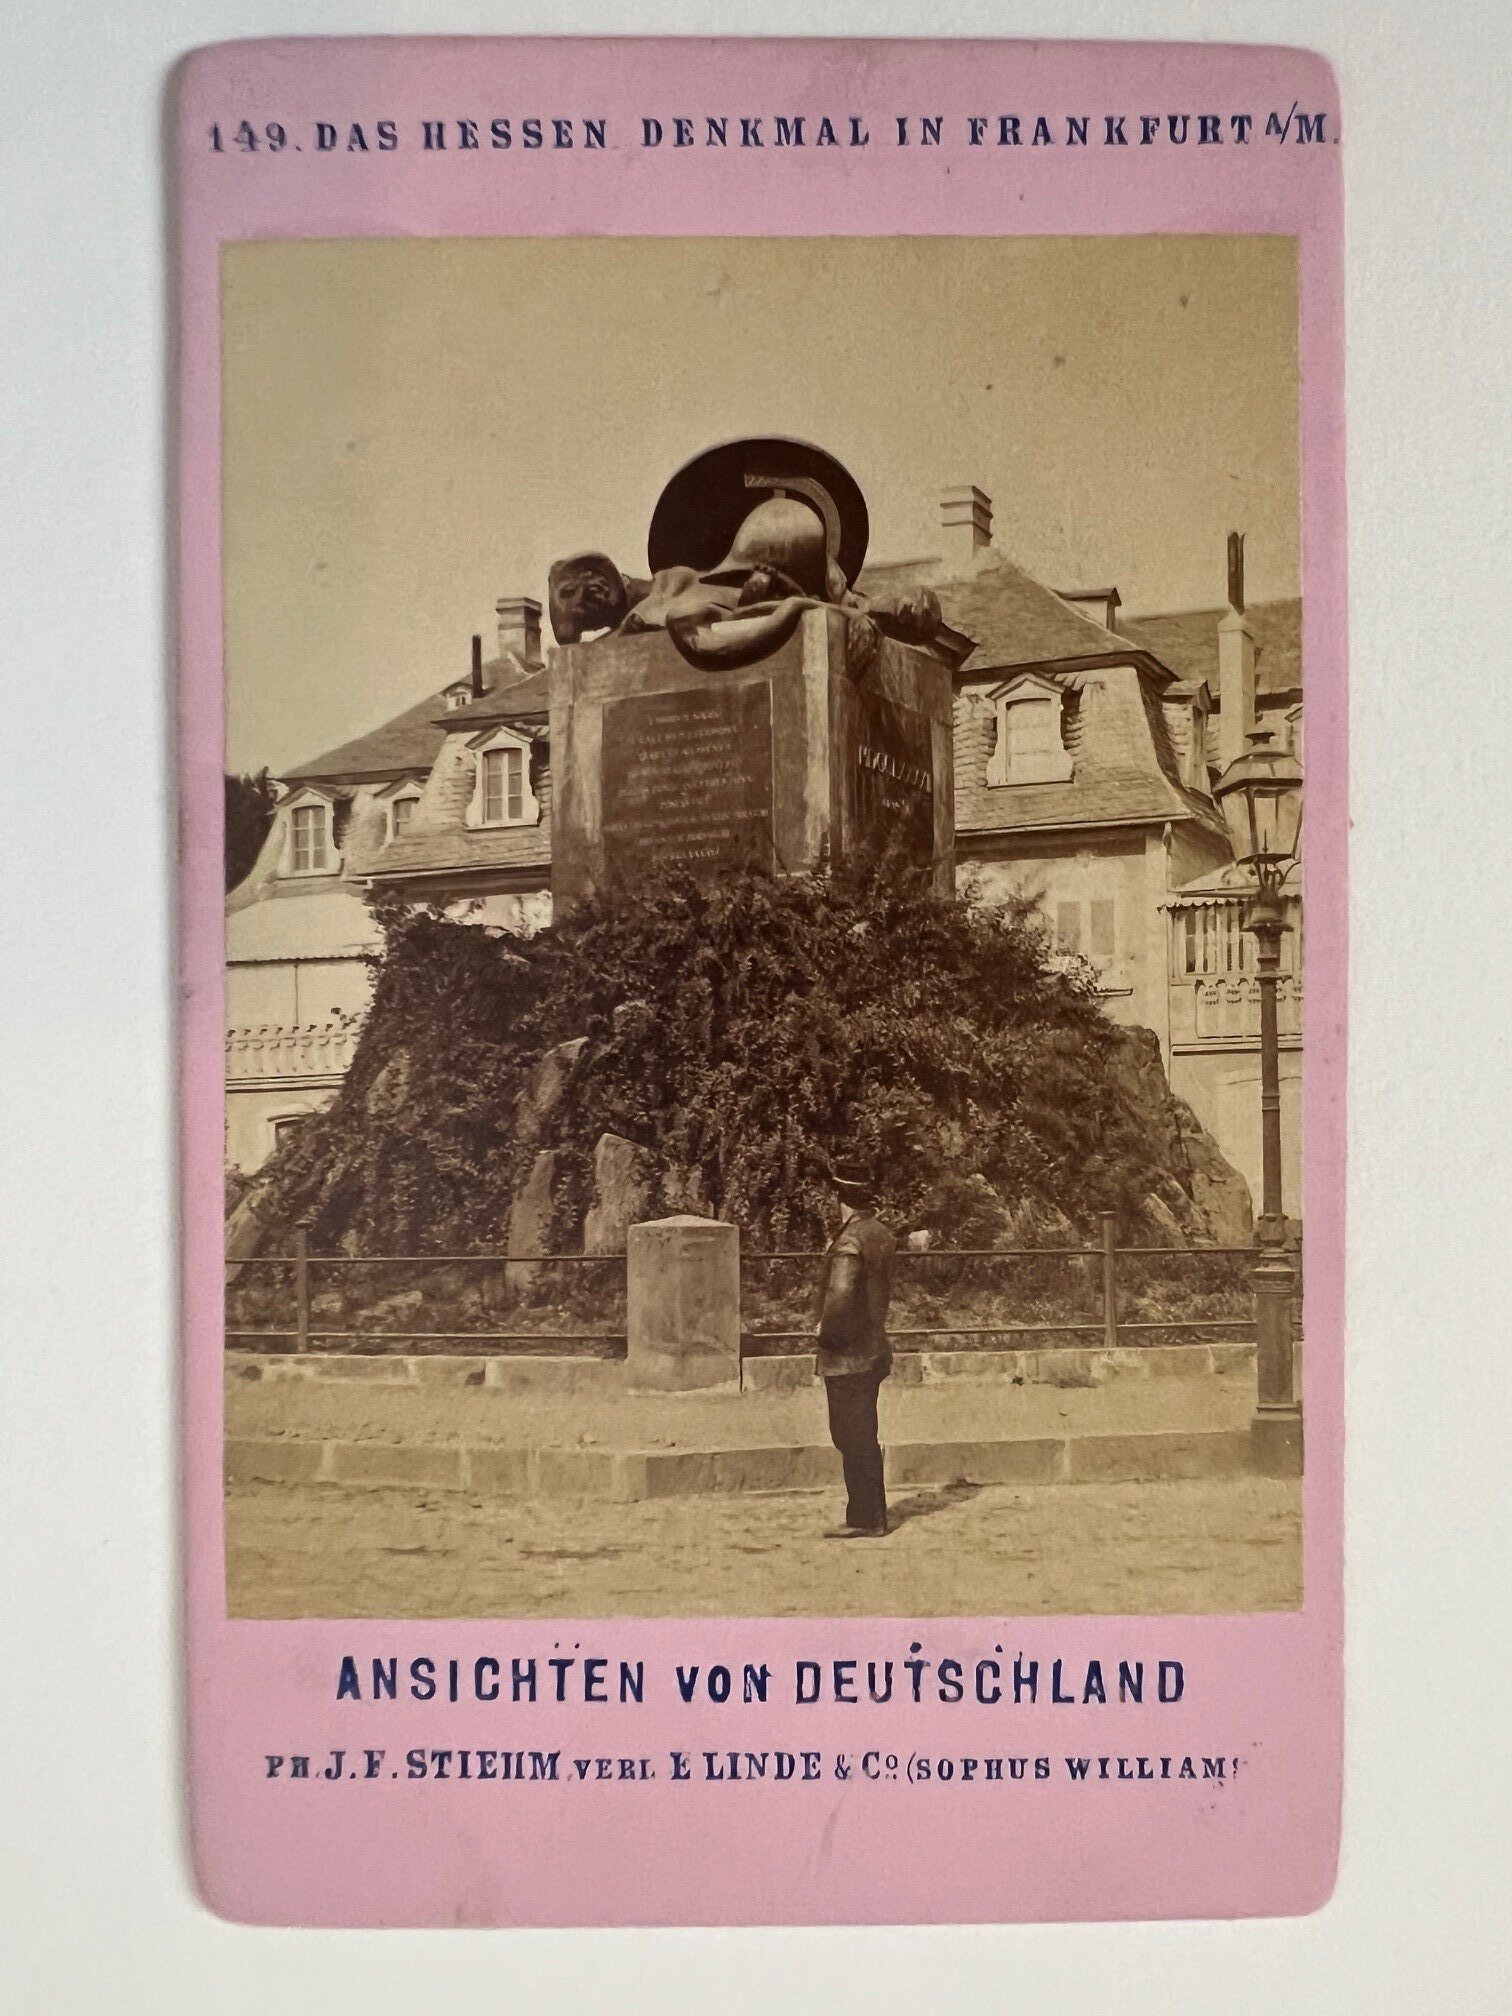 CdV, Johann Friedrich Stiehm, Frankfurt, Nr. 149, Das Hessen-Denkmal, ca. 1881. (Taunus-Rhein-Main - Regionalgeschichtliche Sammlung Dr. Stefan Naas CC BY-NC-SA)